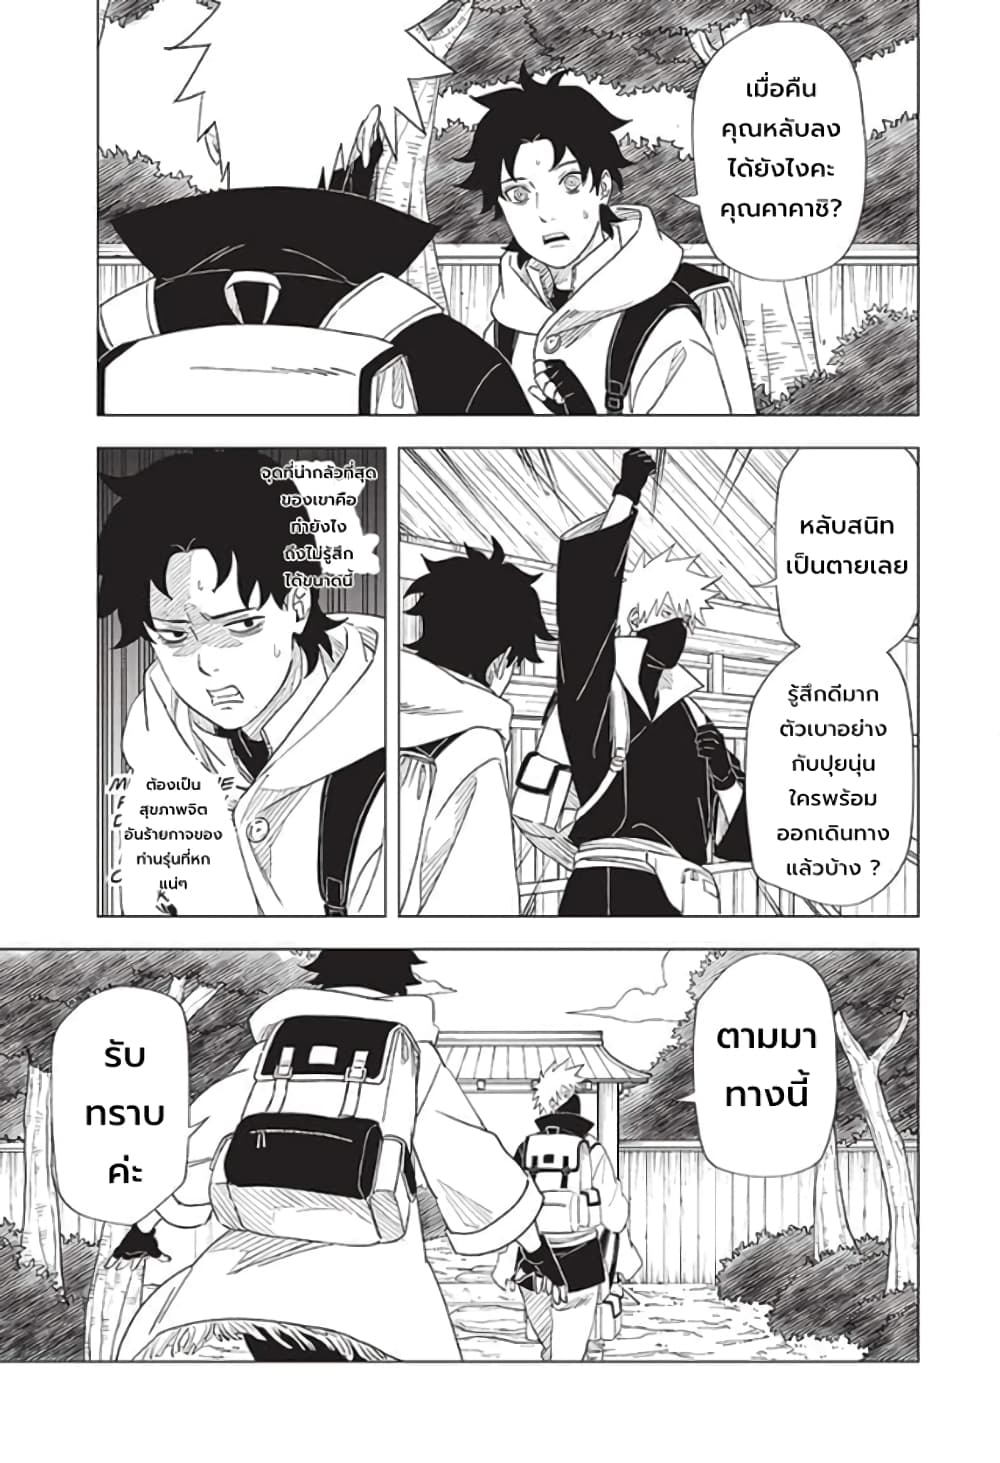 Naruto Konoha’s Story – The Steam Ninja Scrolls The Manga ตอนที่ 8 (19)